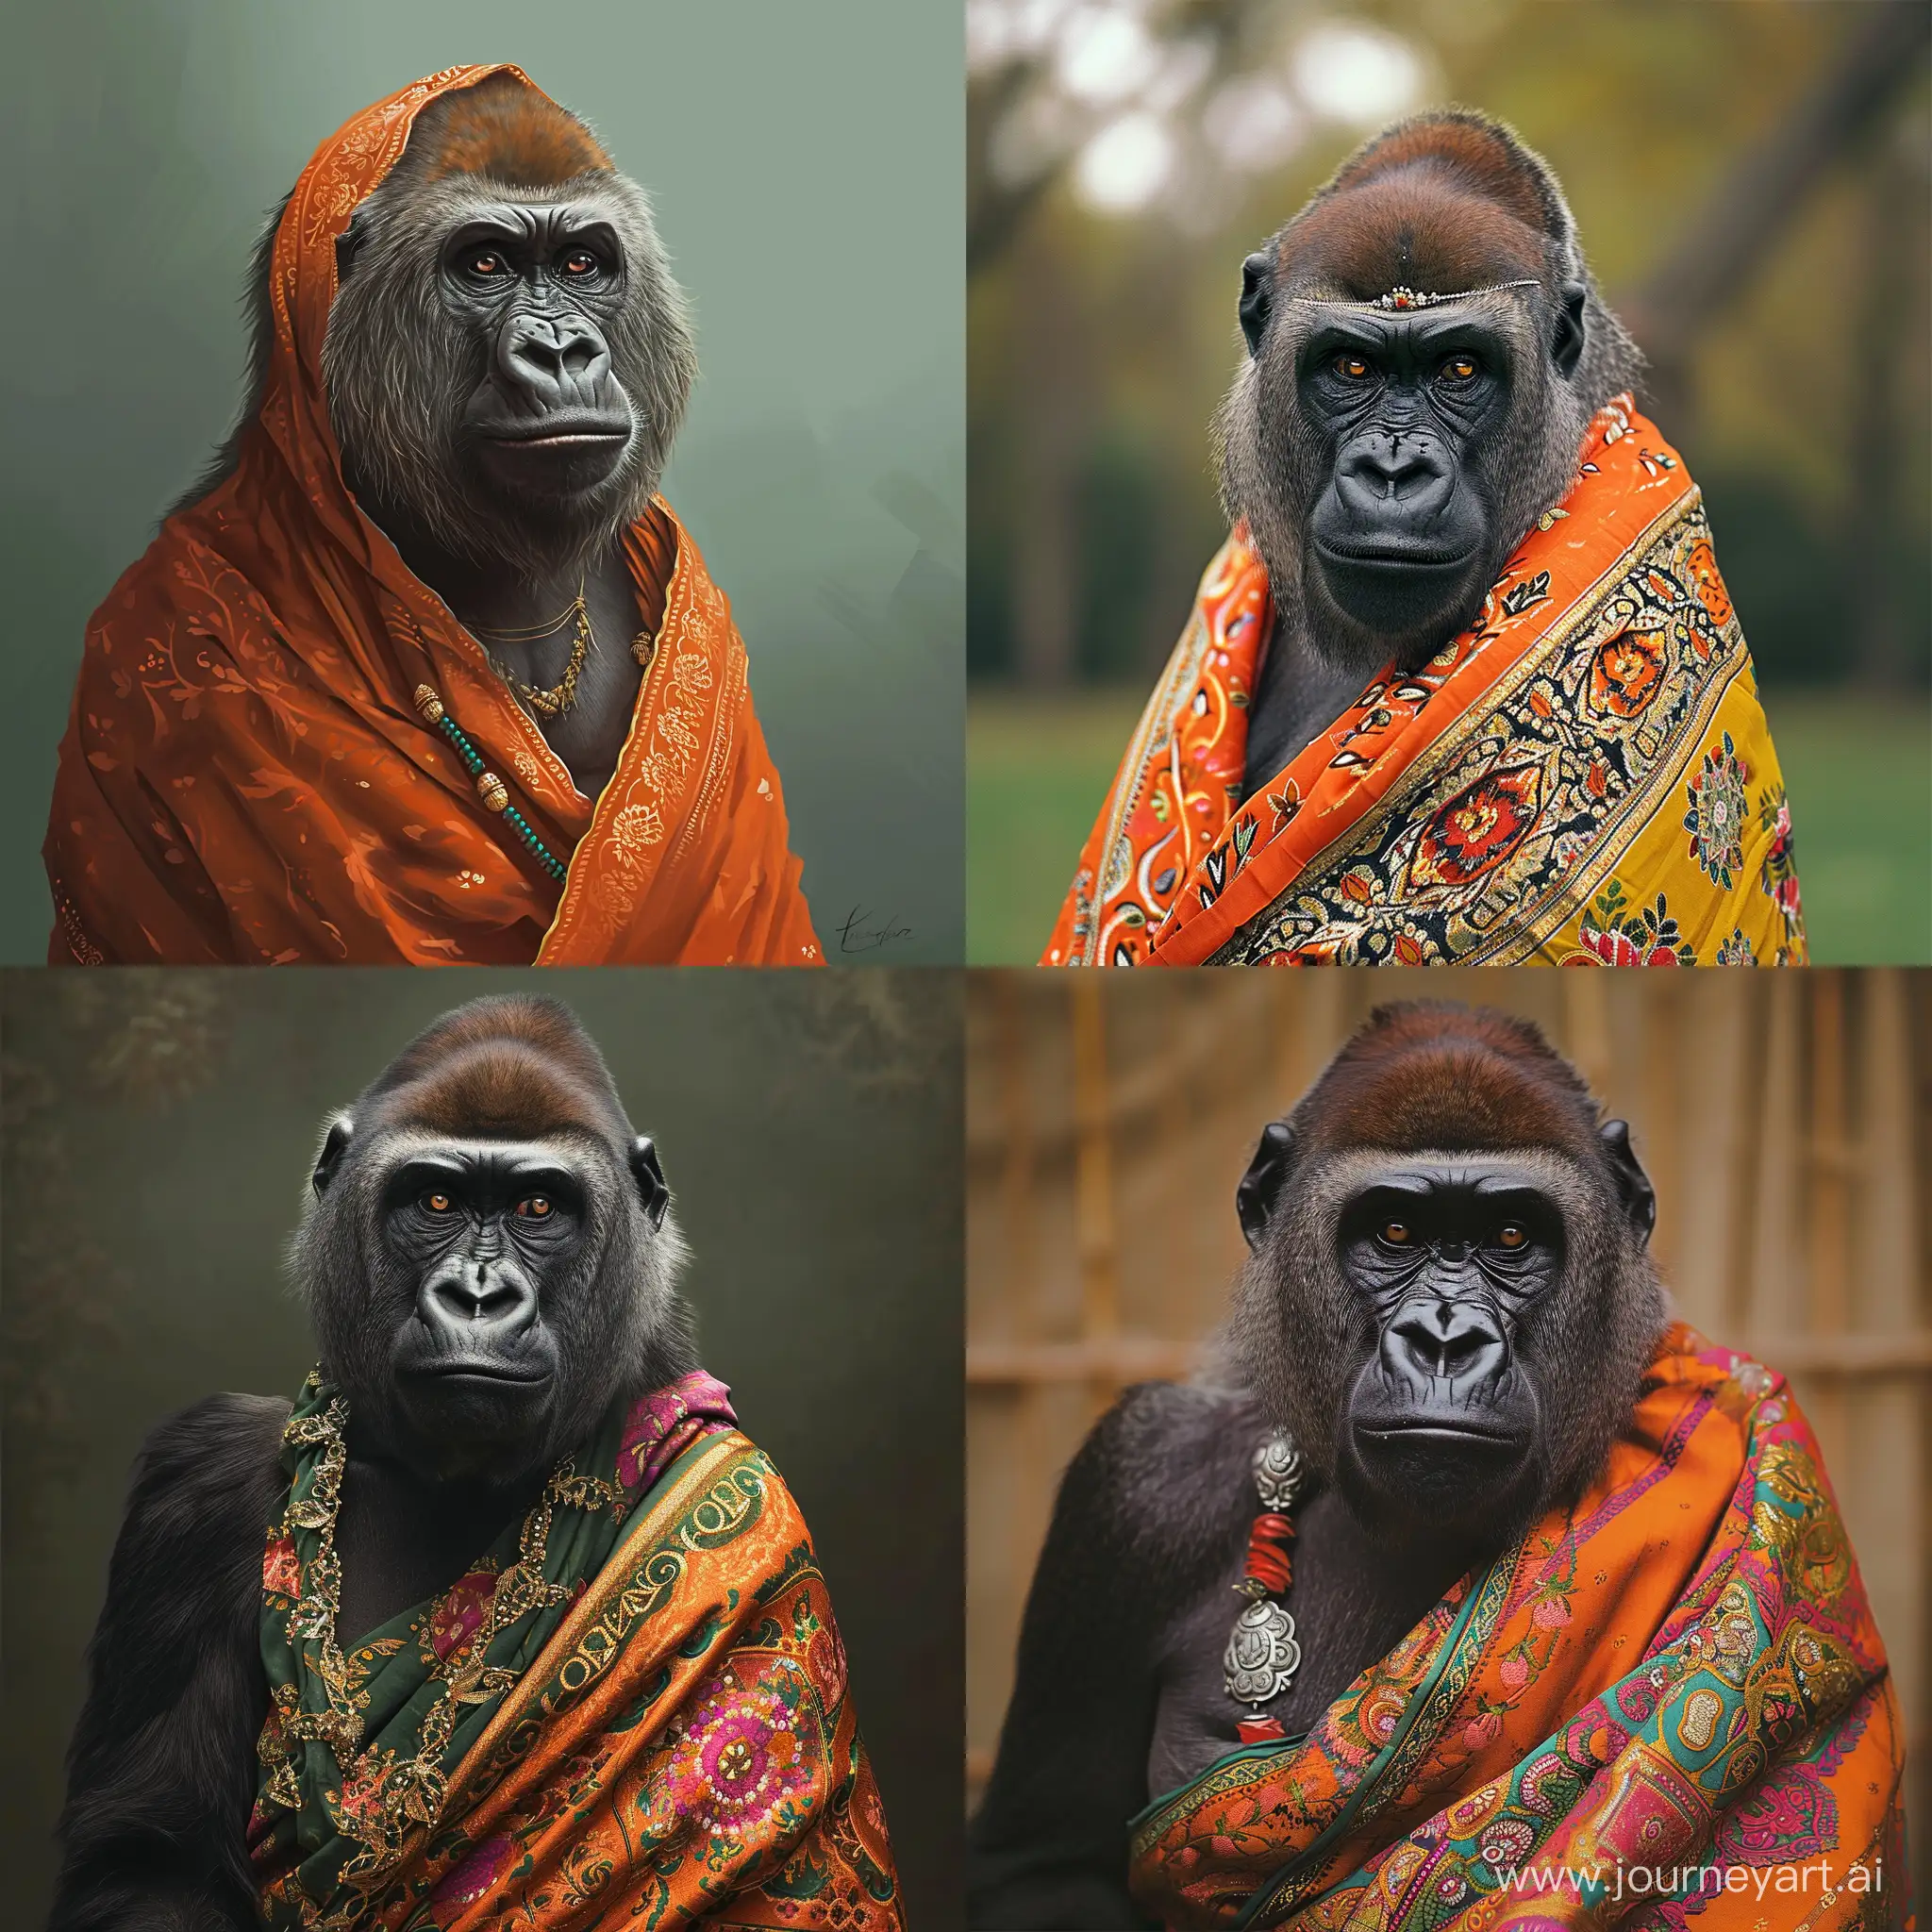 Graceful-Gorilla-Adorned-in-a-Colorful-Sari